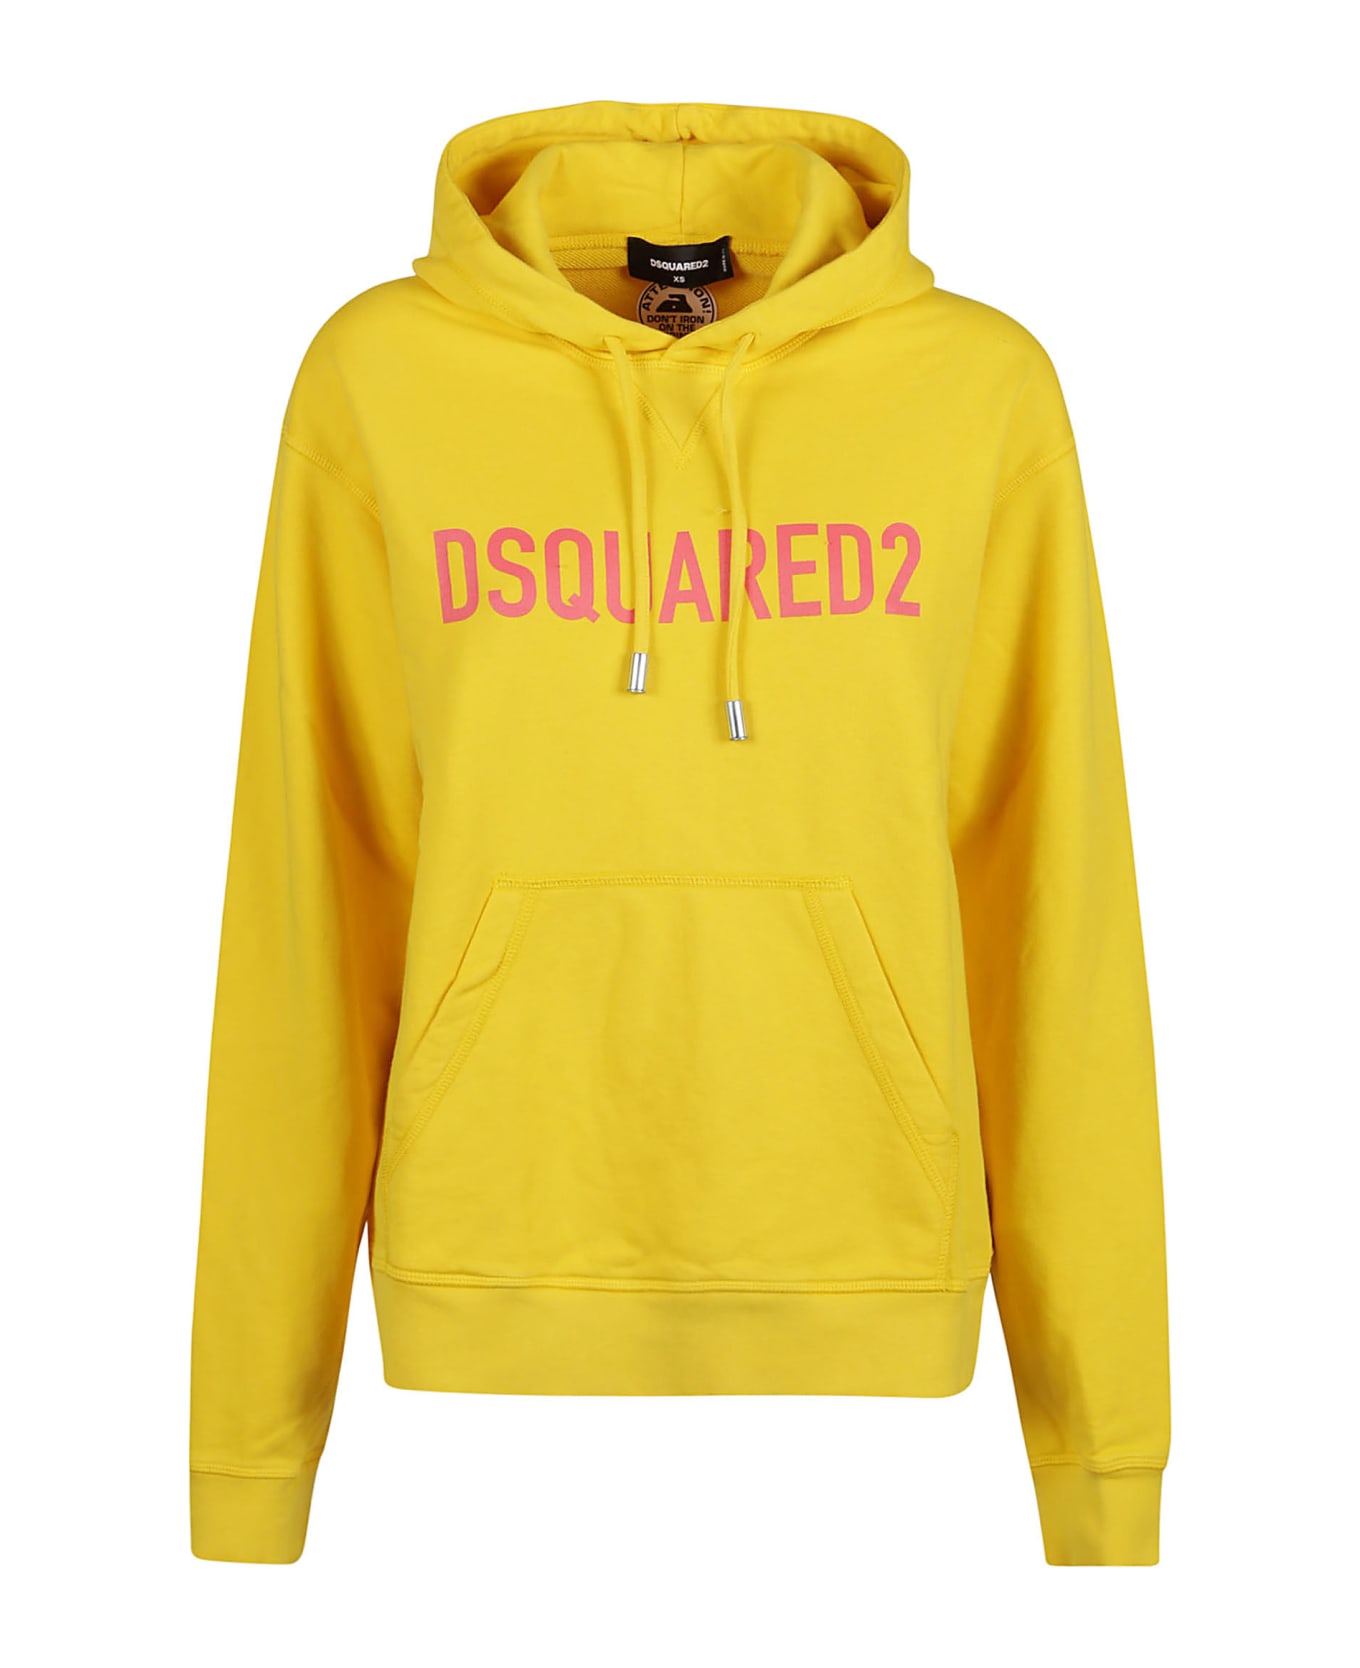 Dsquared2 Cool Sweatshirt - Cyber Yellow